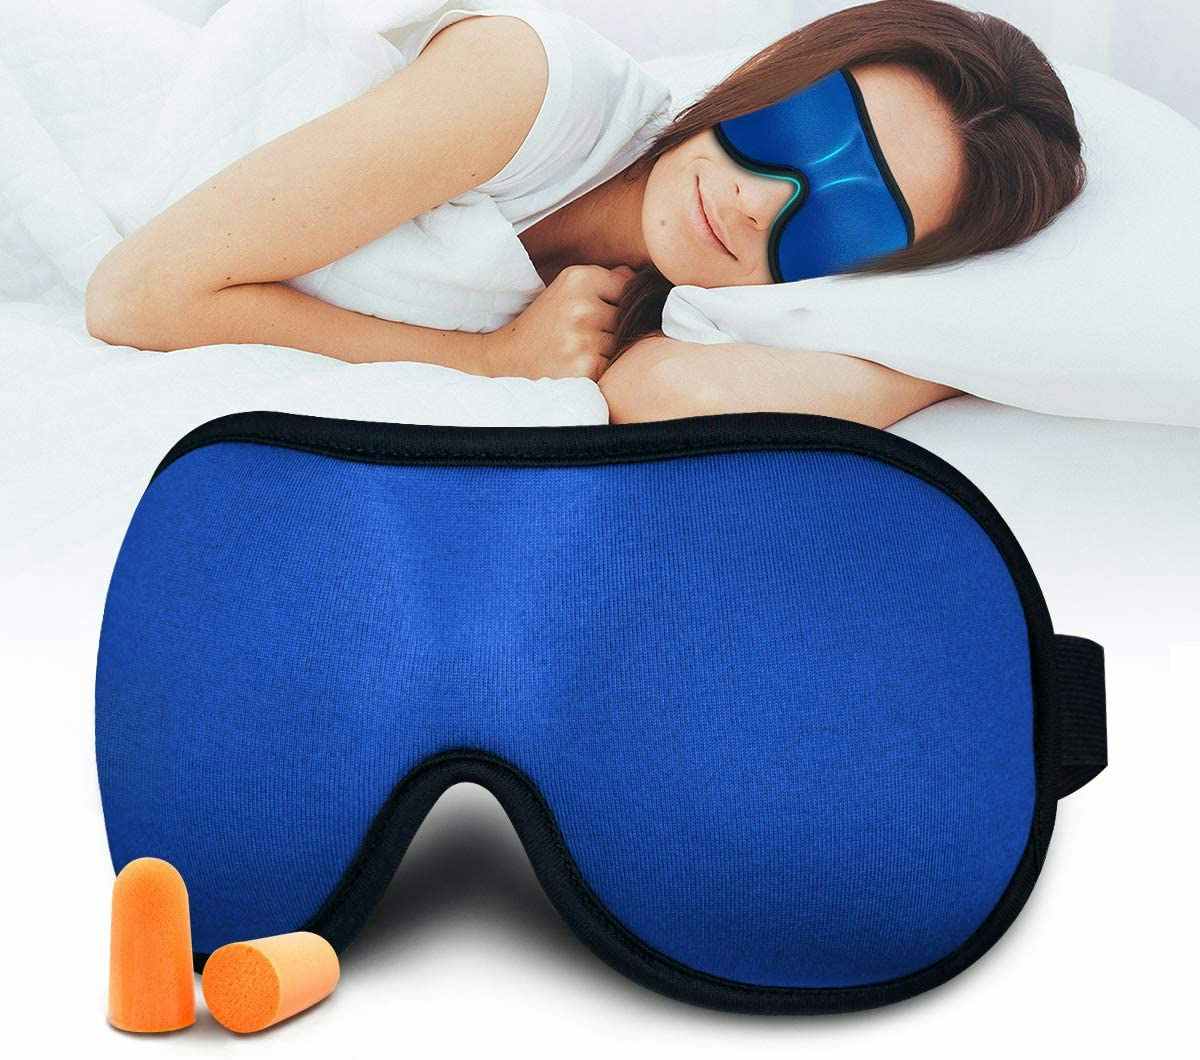 stocking stuffers under $5 - Blue sleep mask